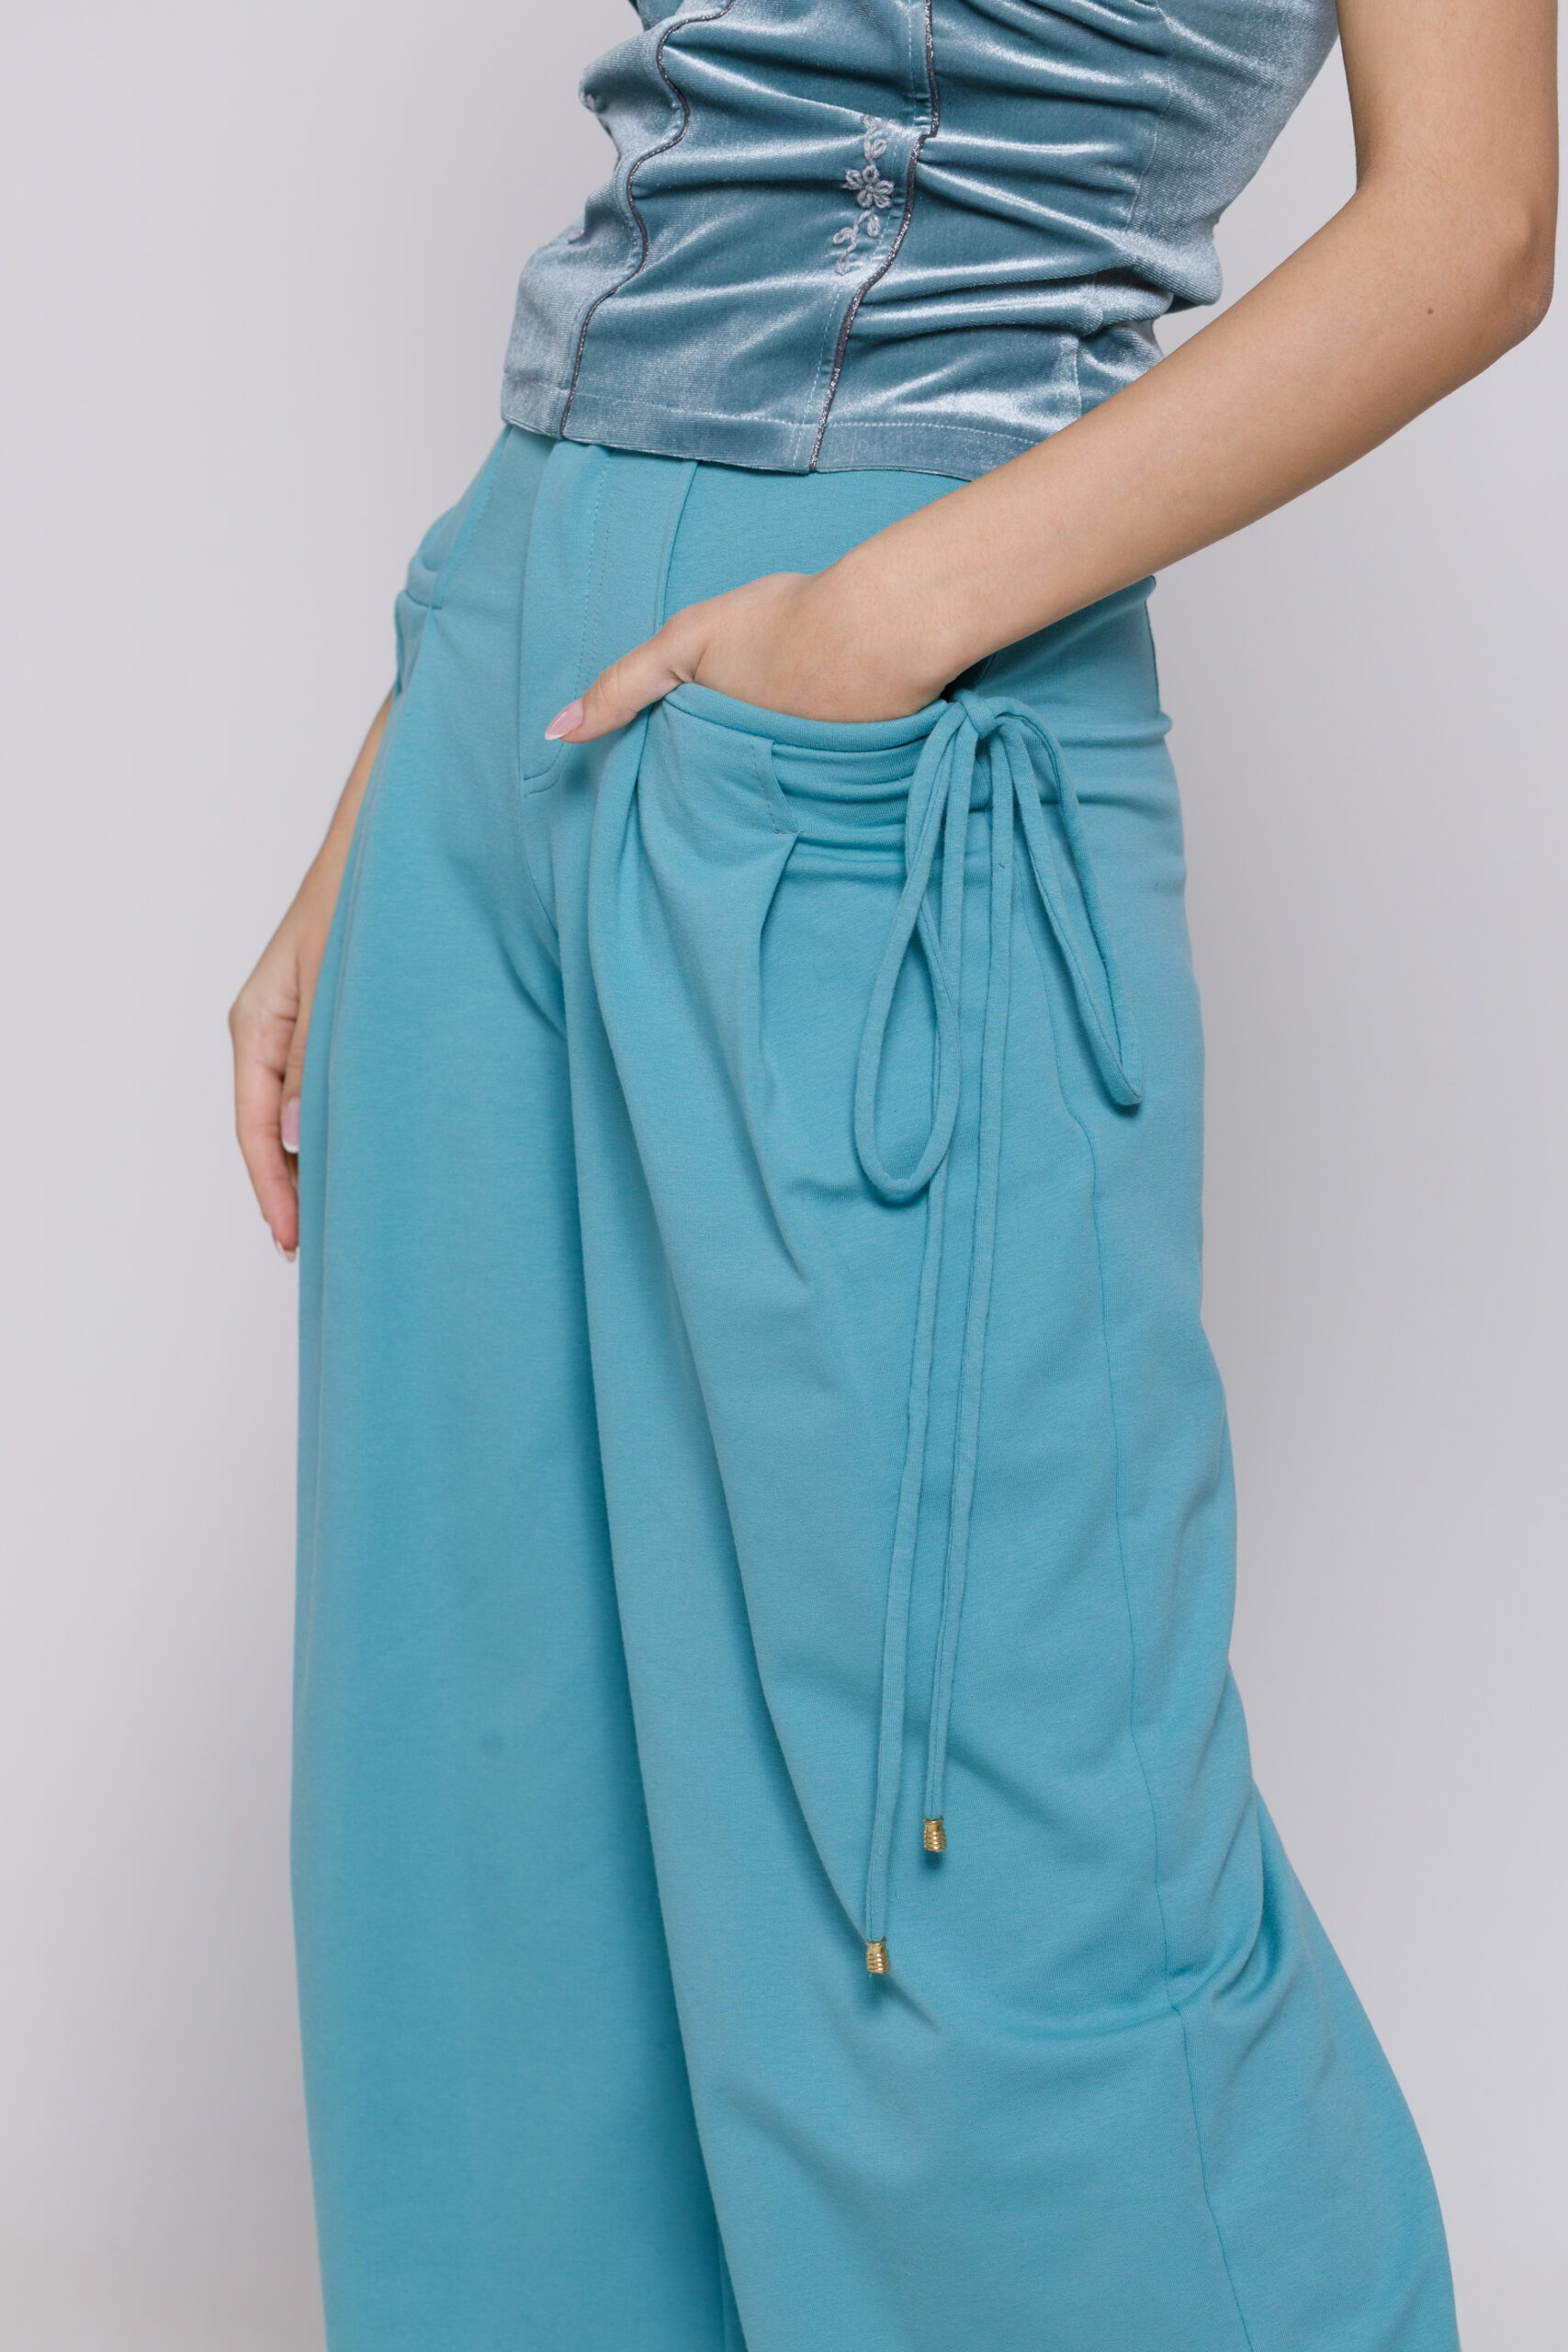 BONNIE turquoise pants. Natural fabrics, original design, handmade embroidery